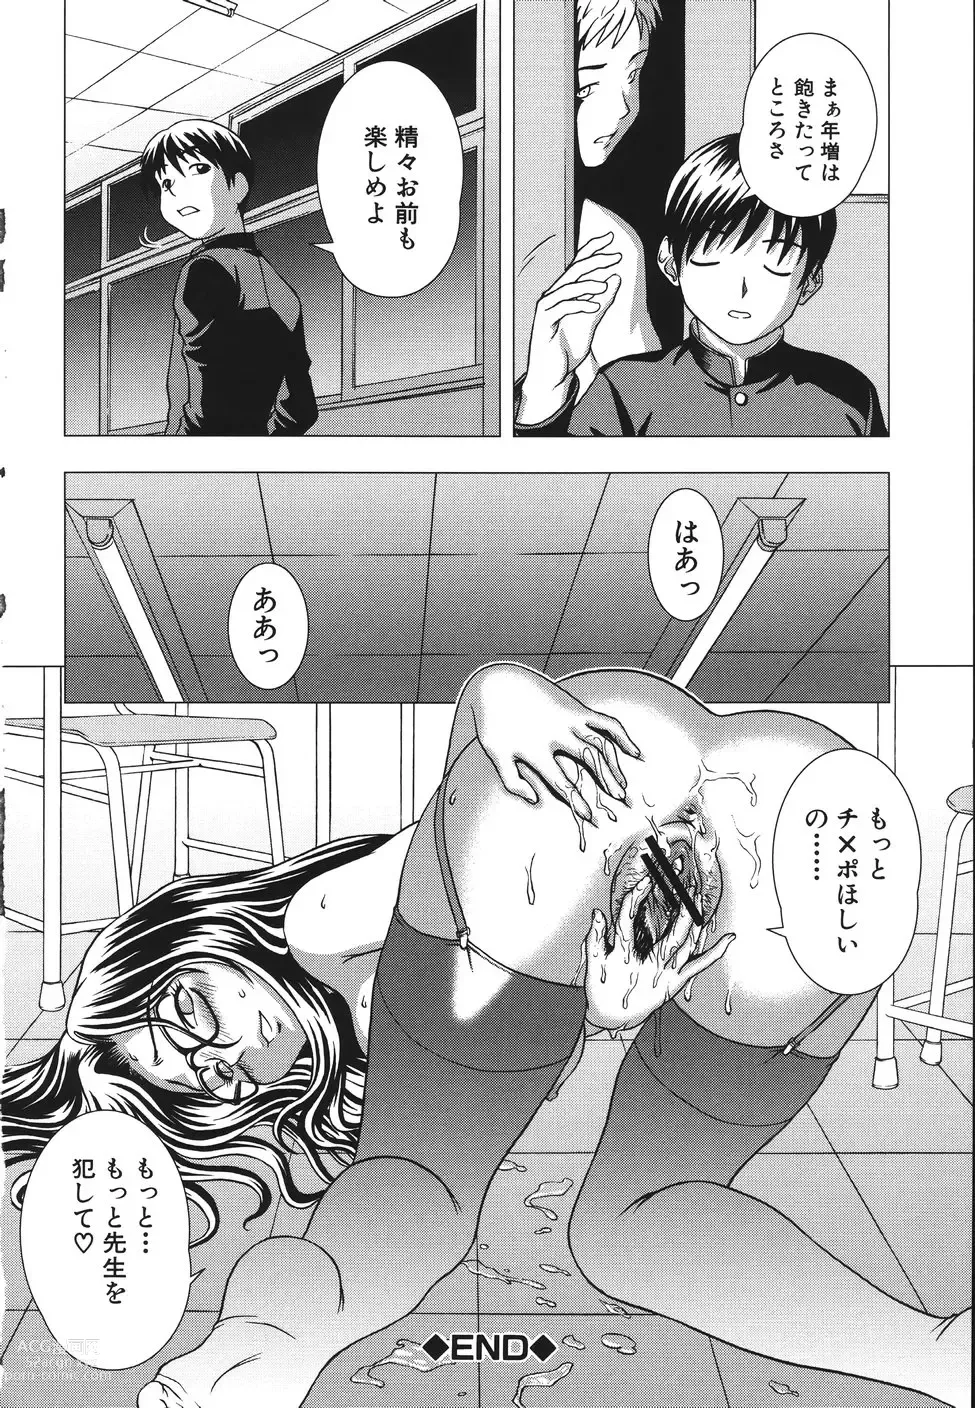 Page 204 of manga Shisupure